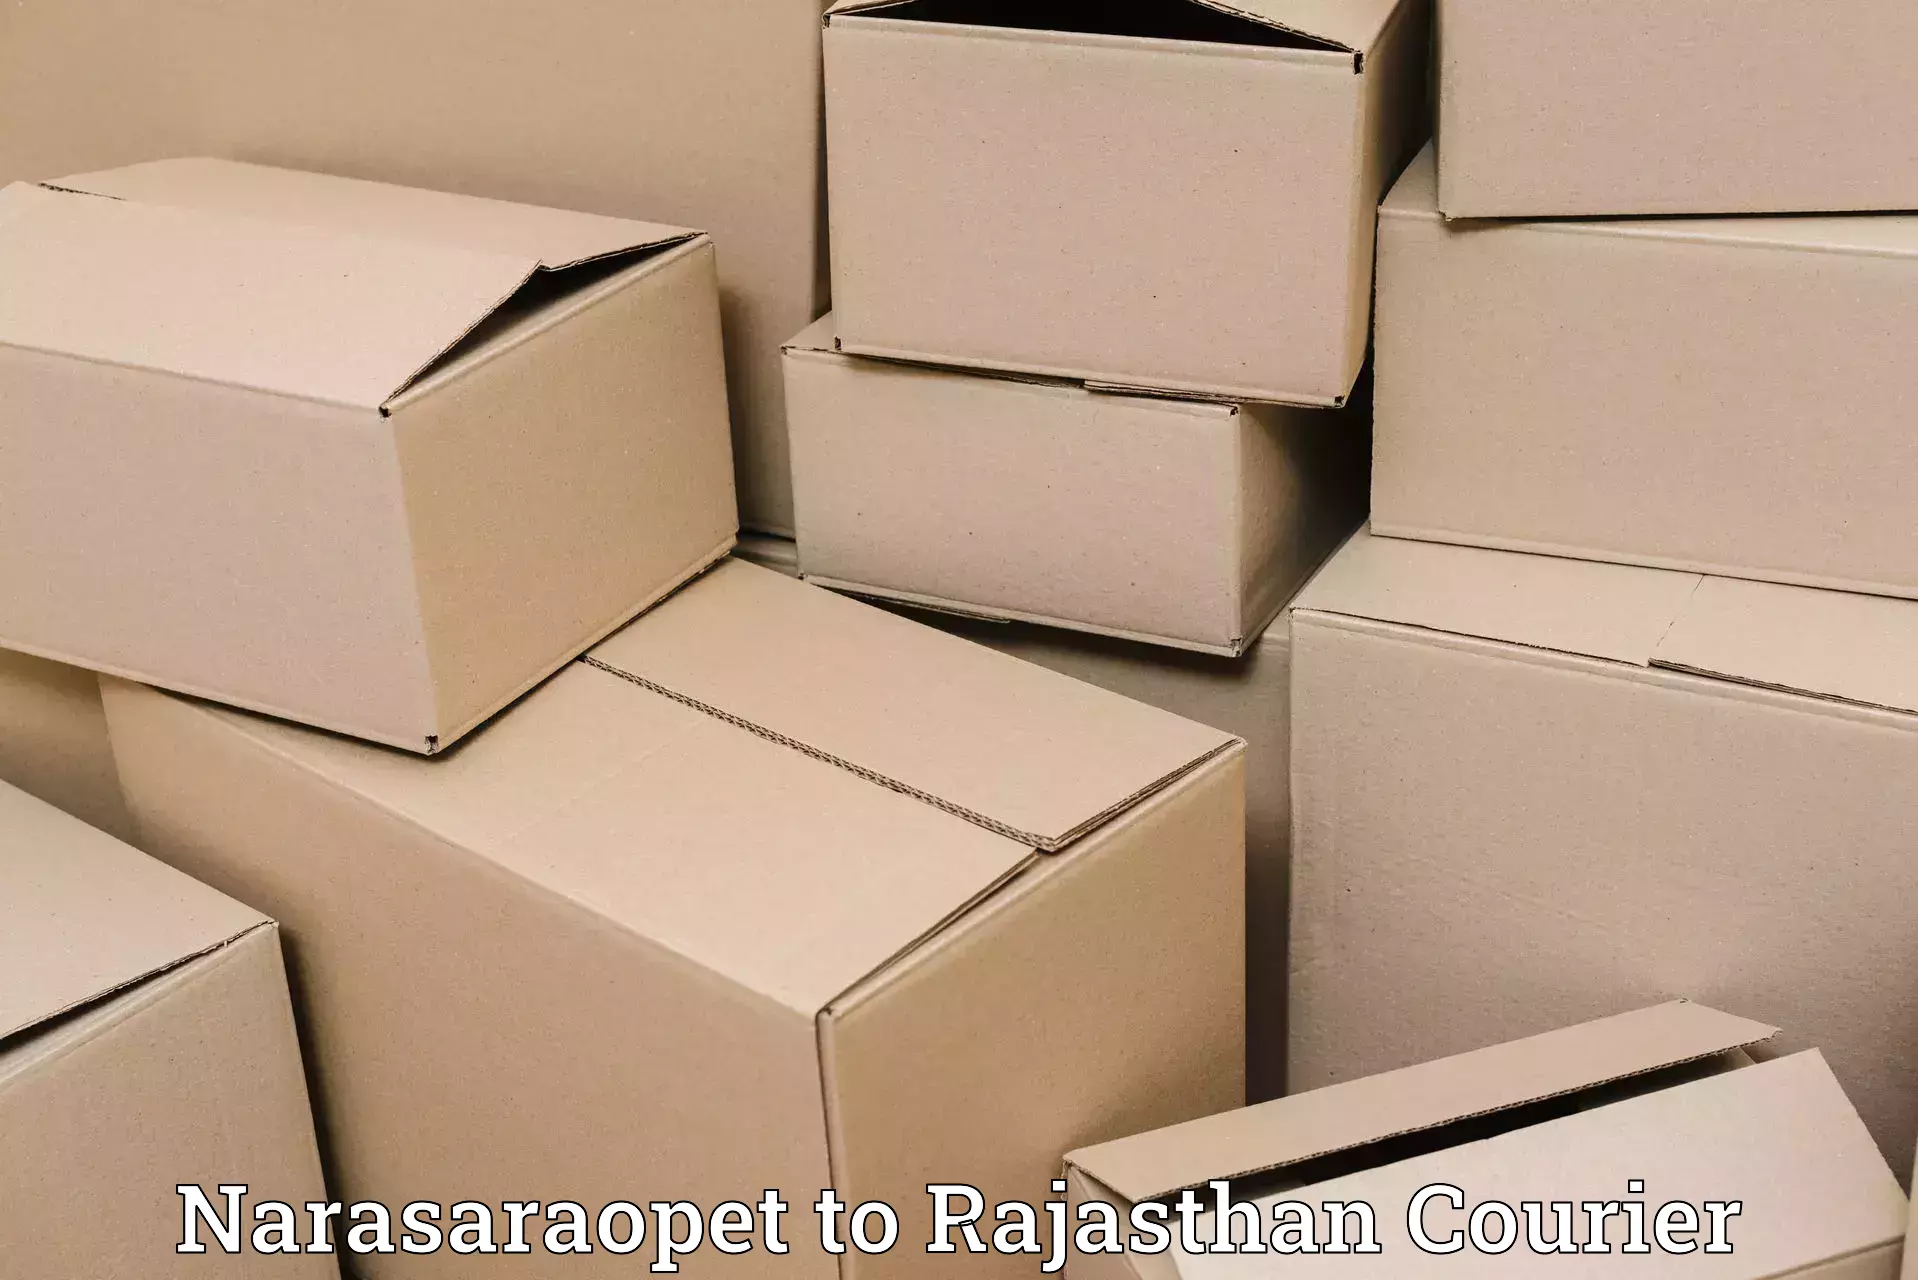 Affordable international shipping Narasaraopet to Rajasthan